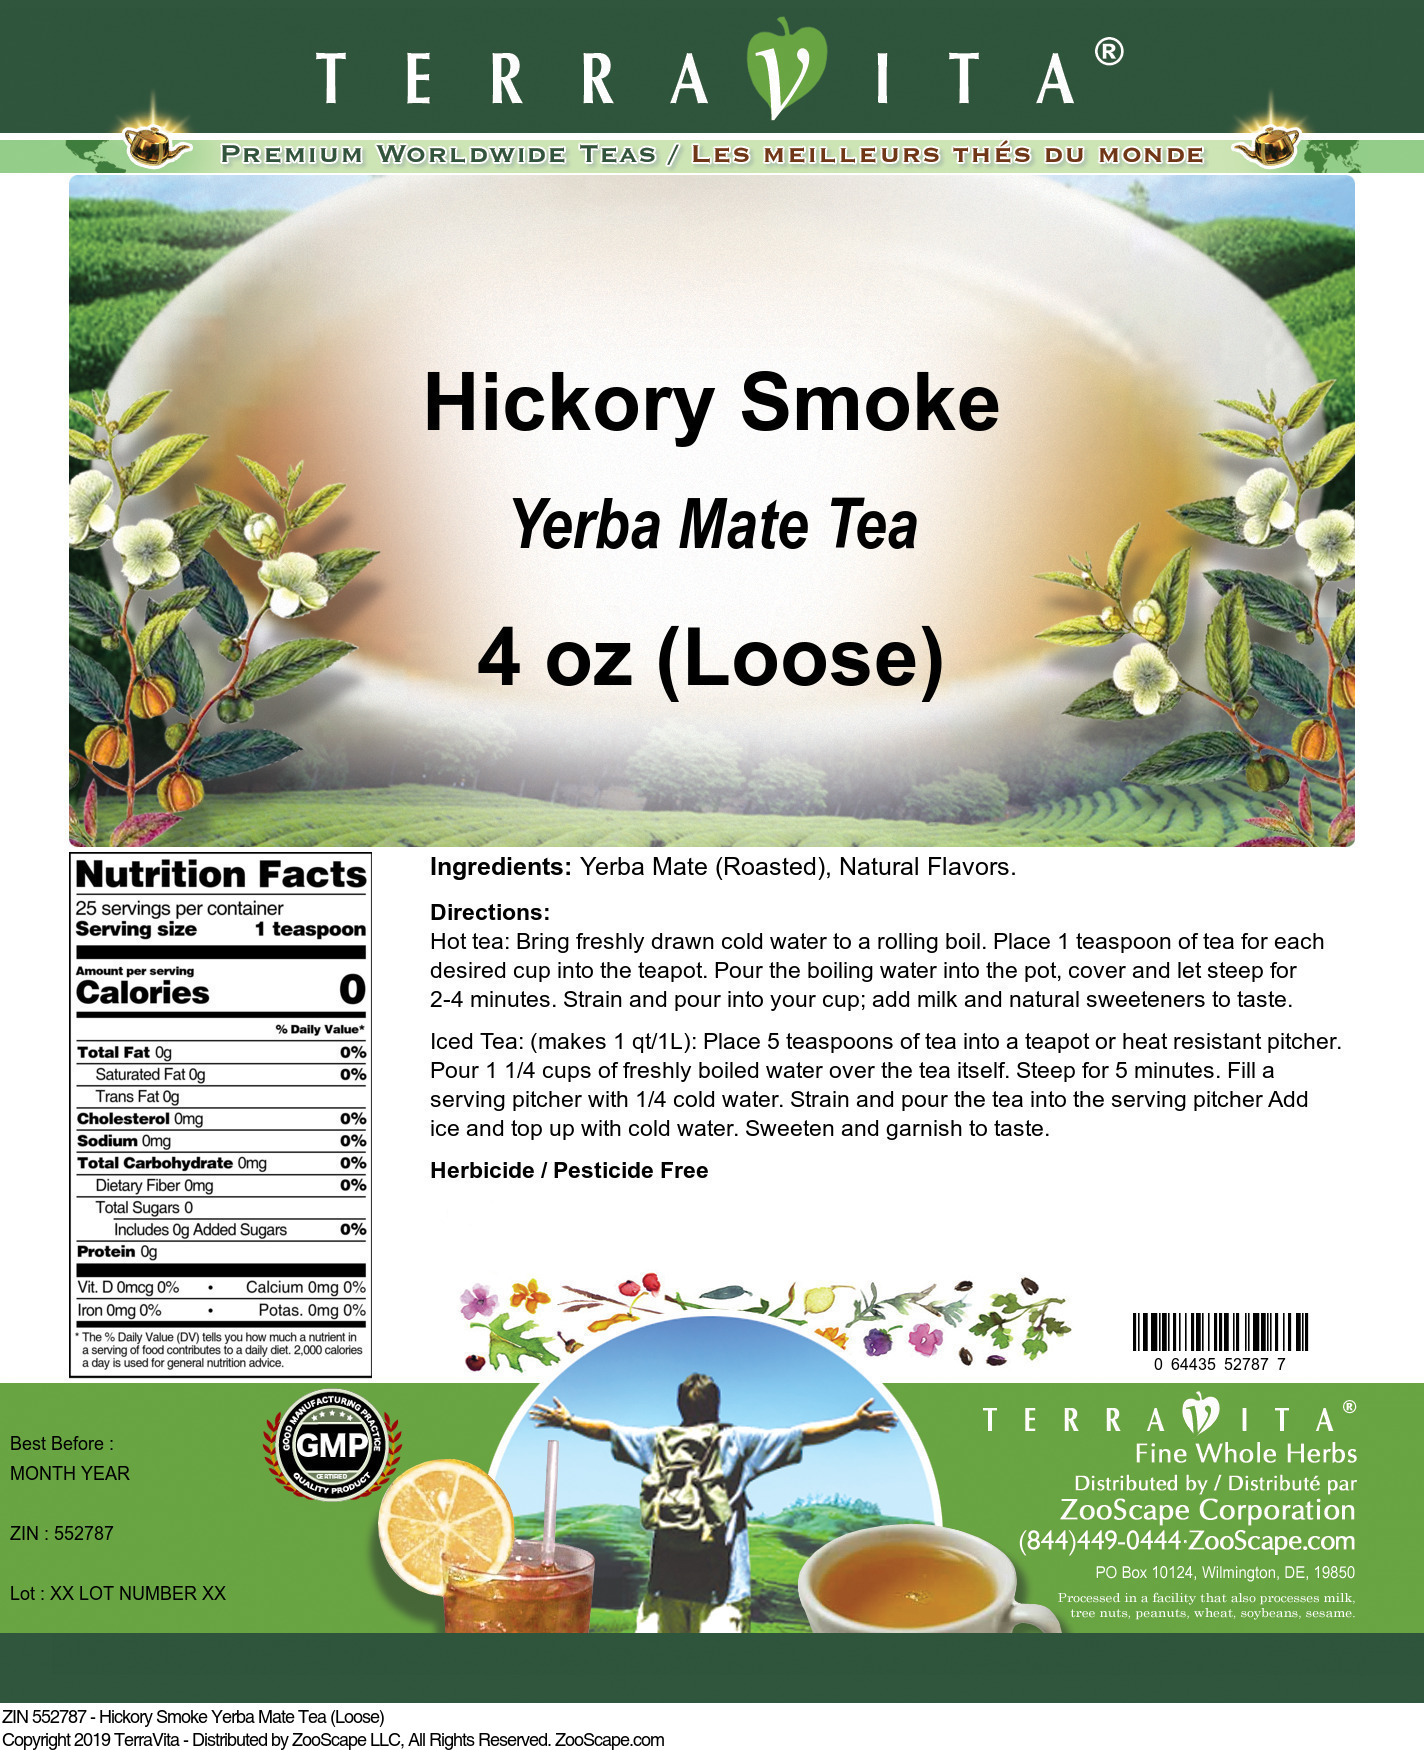 Hickory Smoke Yerba Mate Tea (Loose) - Label